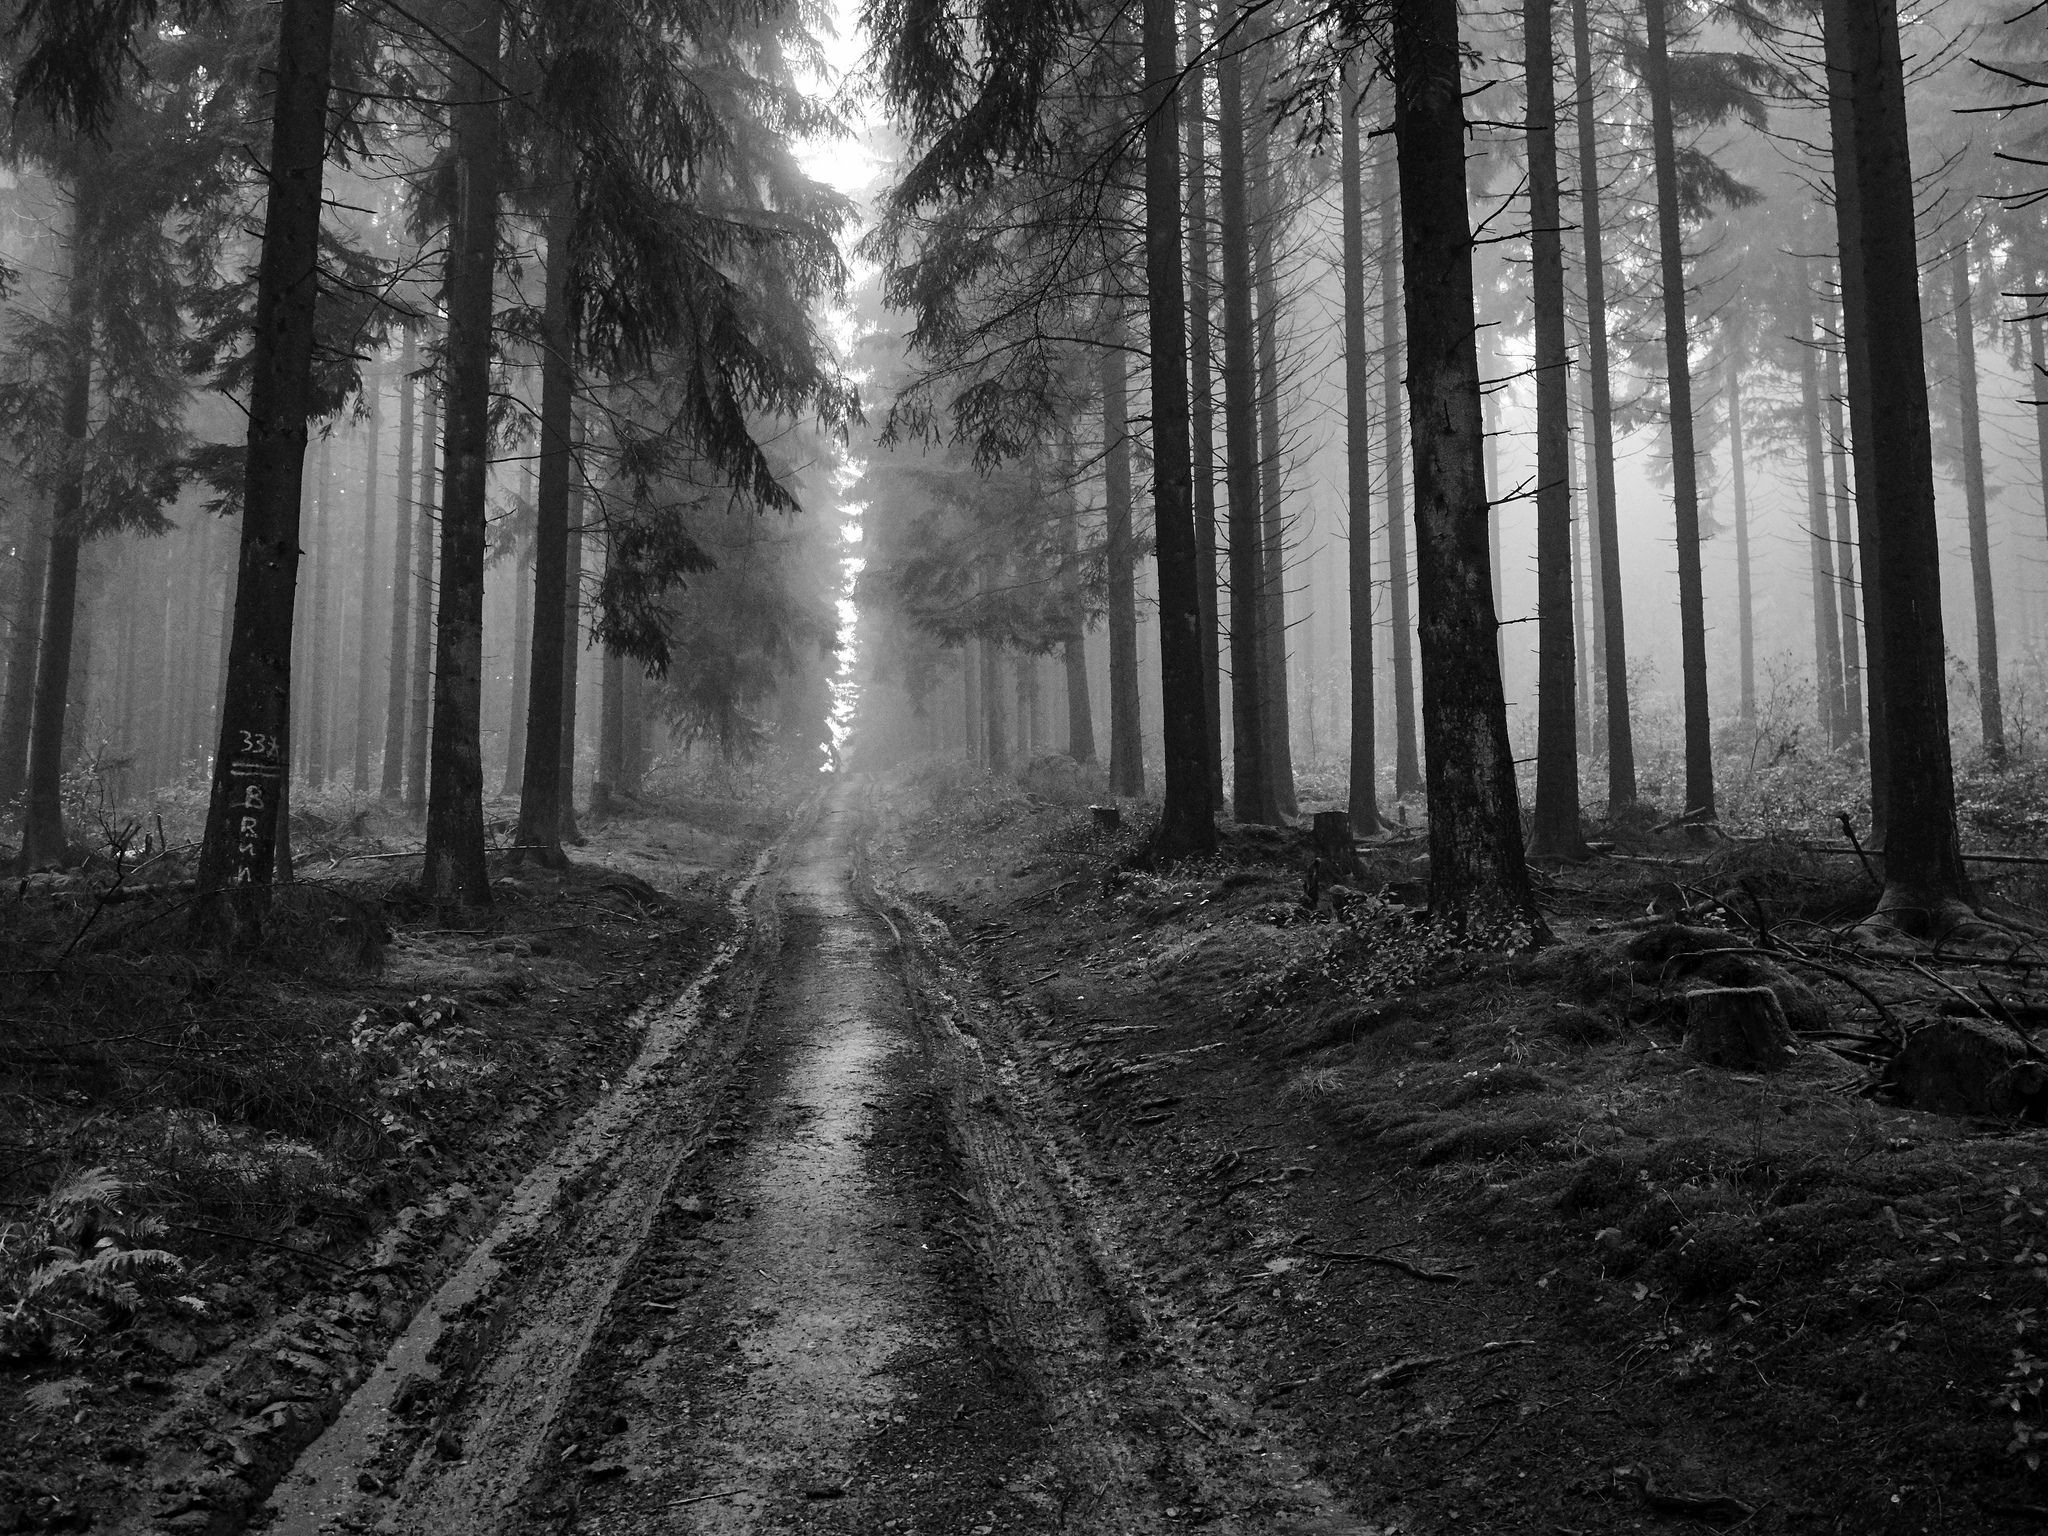 General 2048x1536 forest monochrome trees mist dirt dirt road